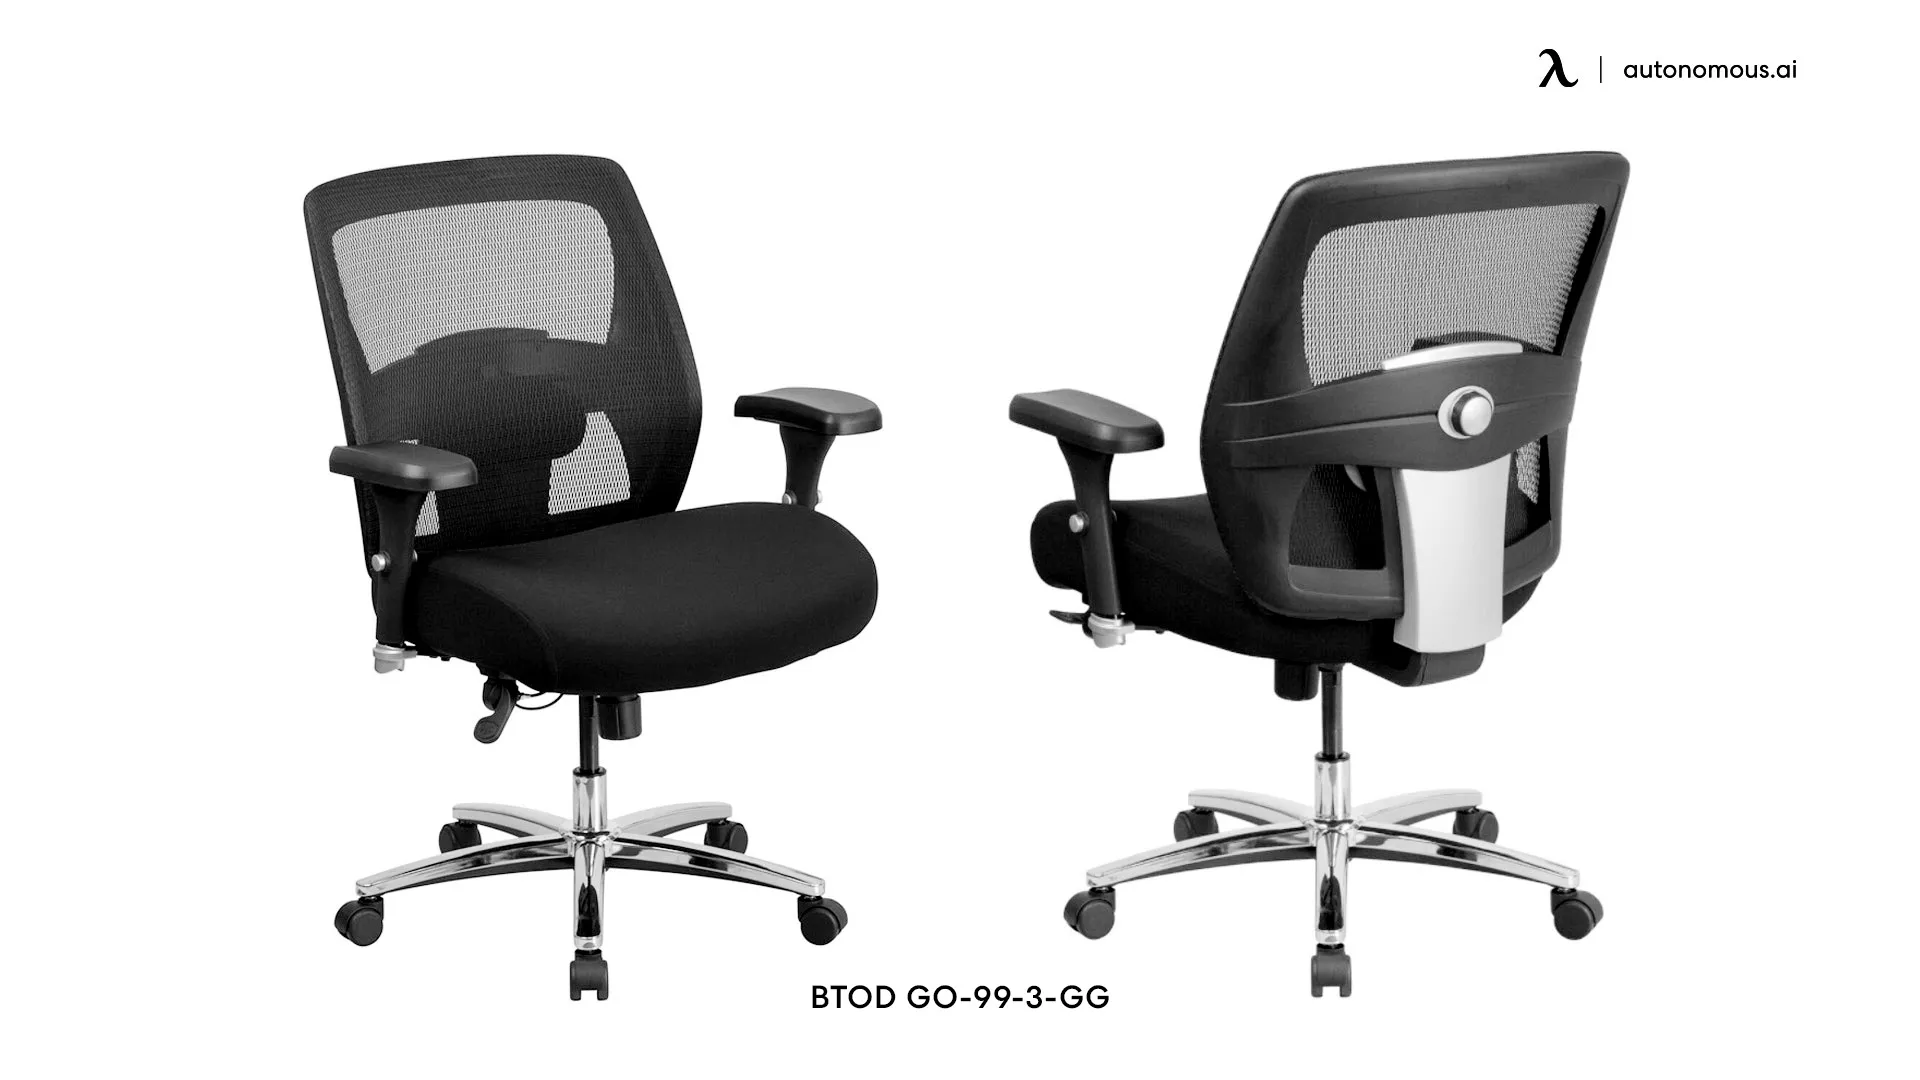 GO-99-3-GG by BTOD mesh office chair